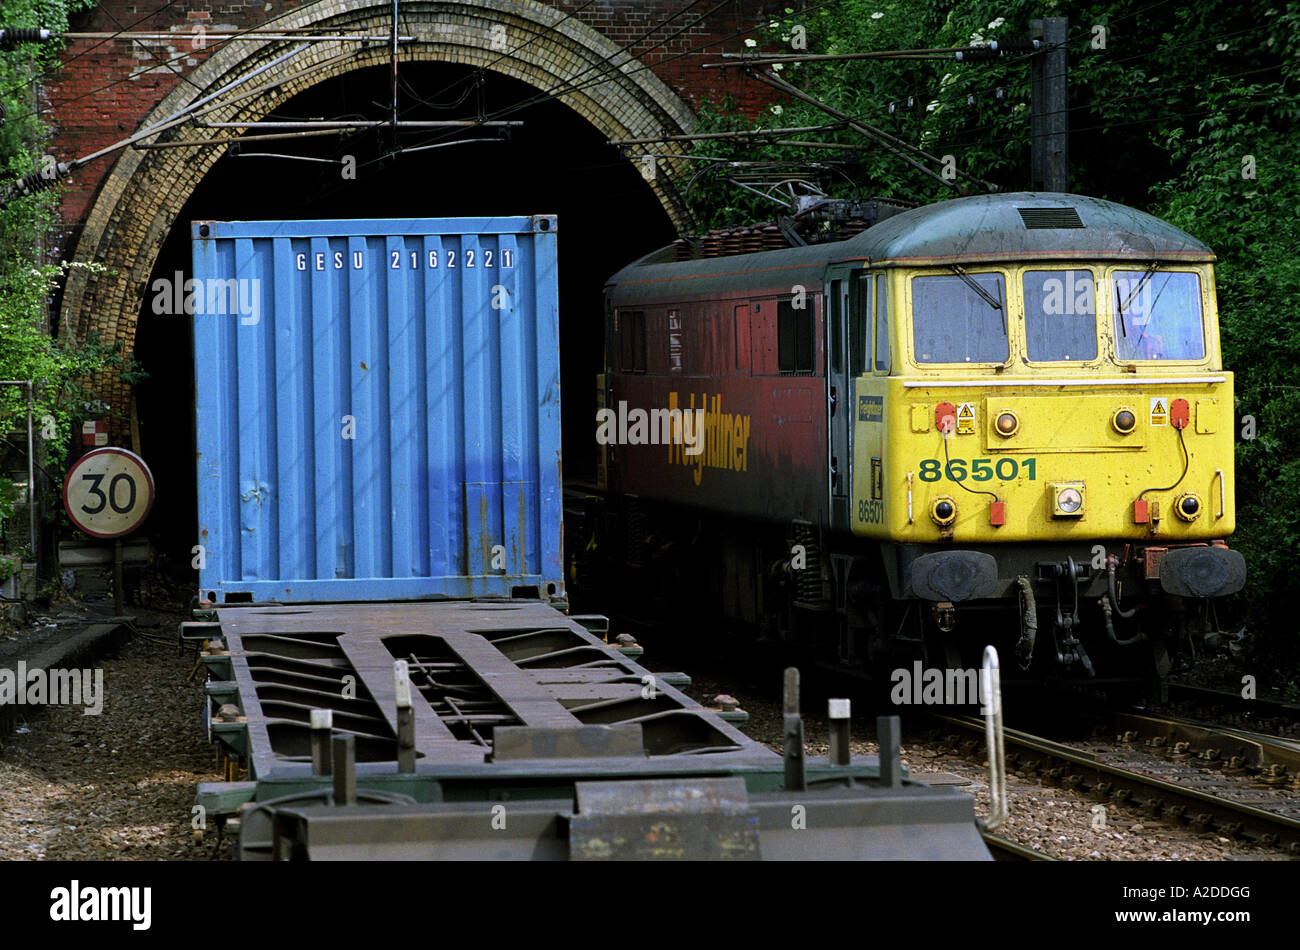 Freight trains passing through the tunnel on the Felixstowe to Nuneaton railway line, Ipswich, Suffolk, UK. Stock Photo